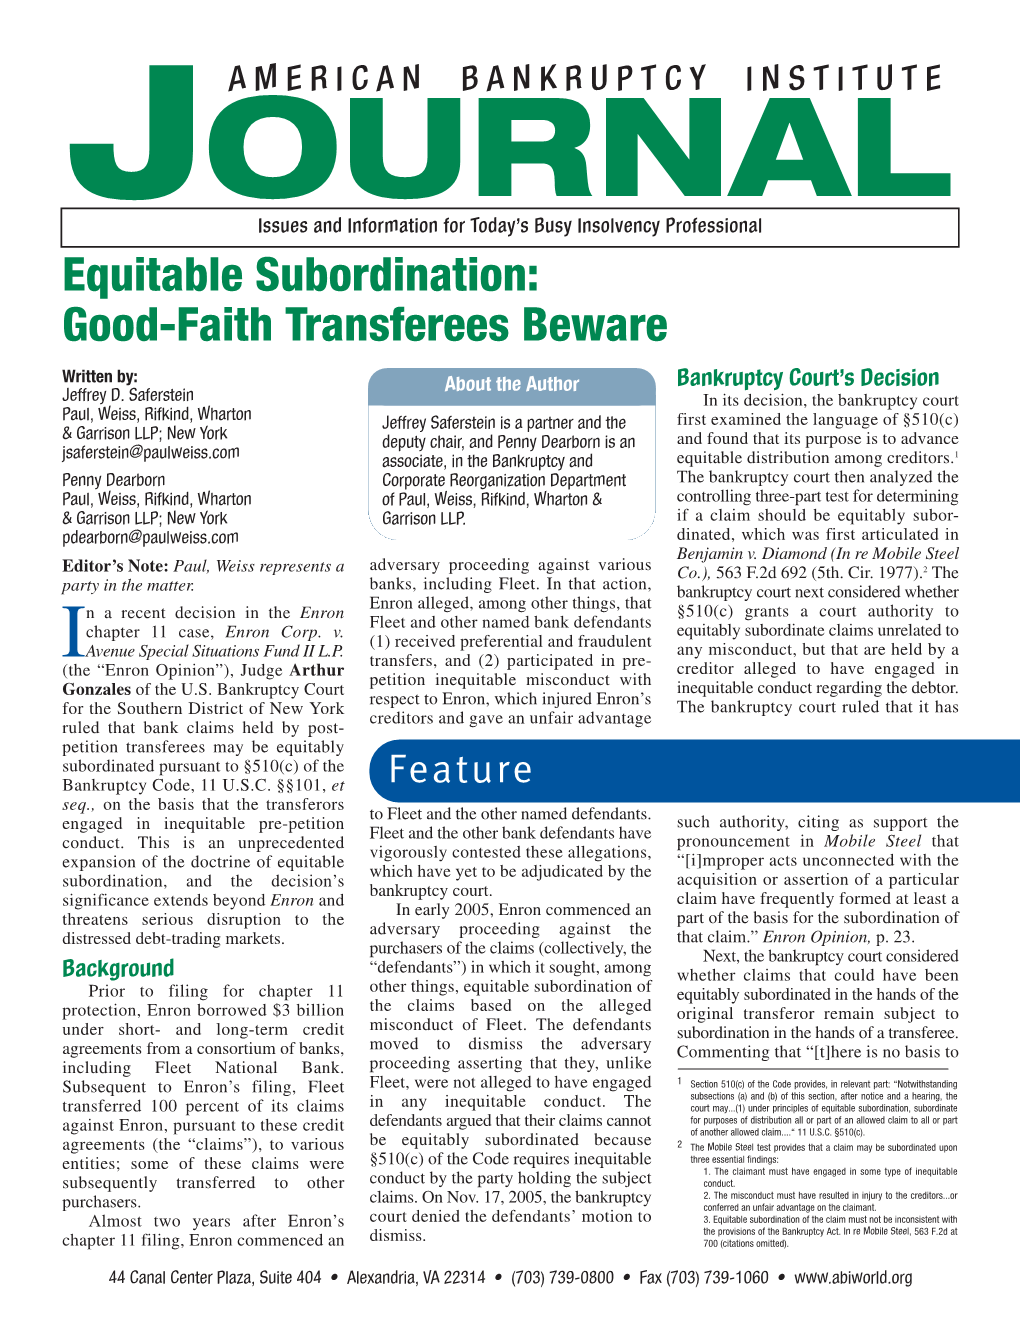 Equitable Subordination: Good-Faith Transferees Beware